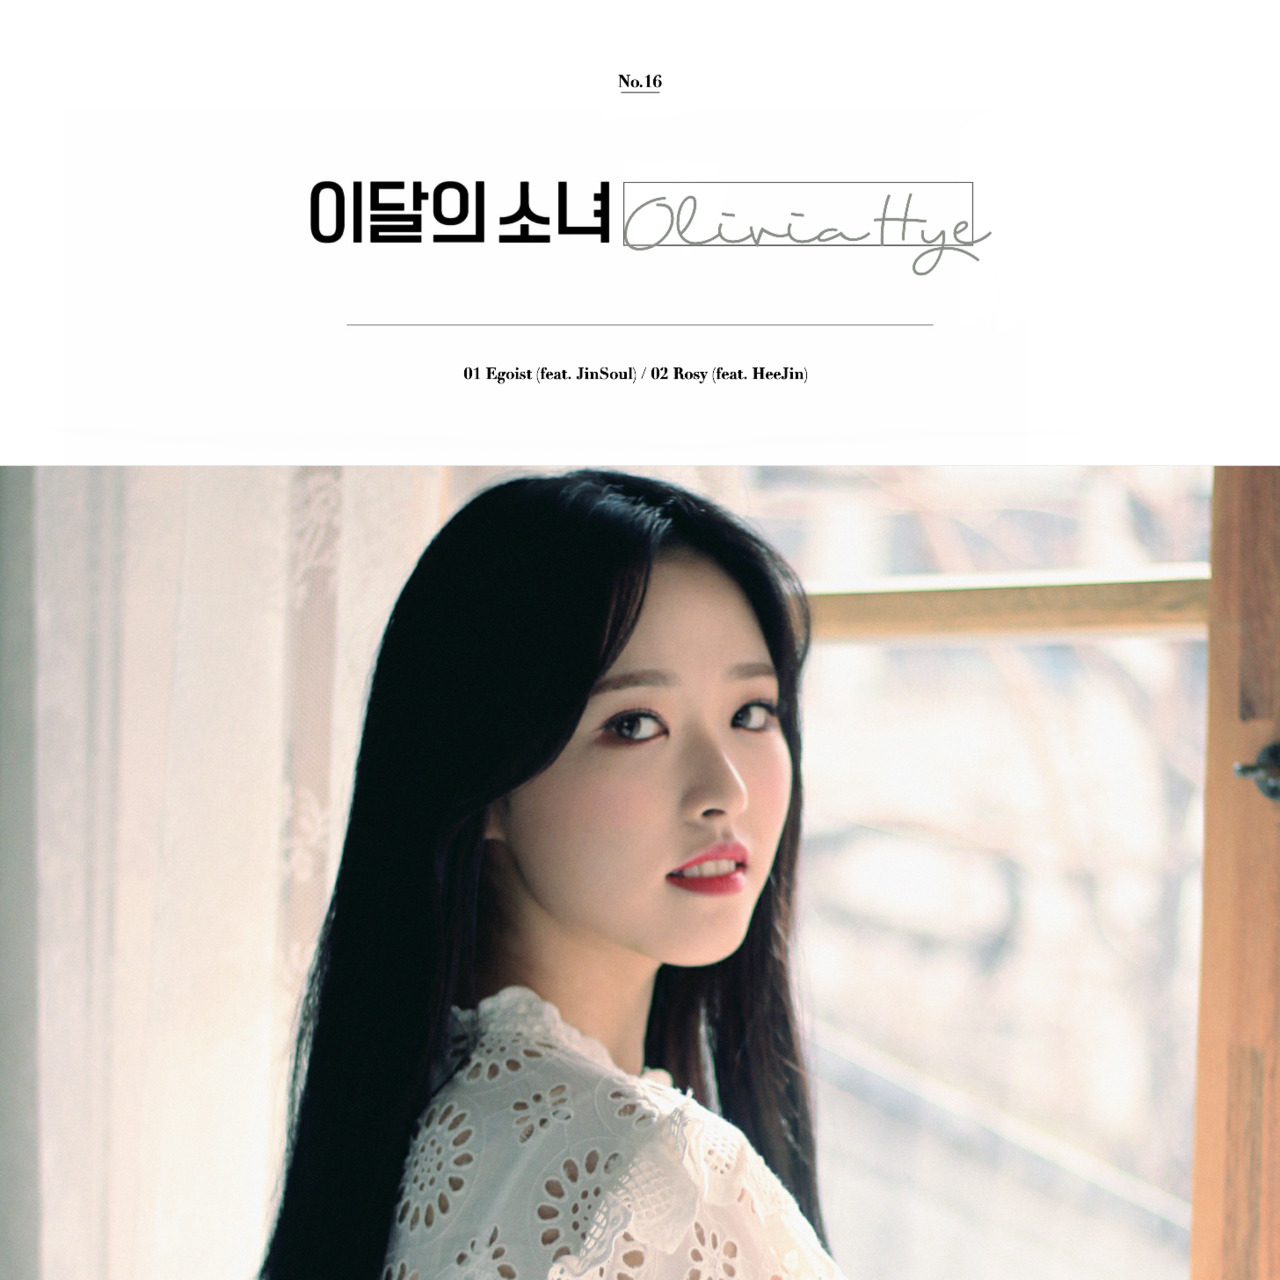 LOONA & Olivia Hye featuring JinSoul — Egoist cover artwork